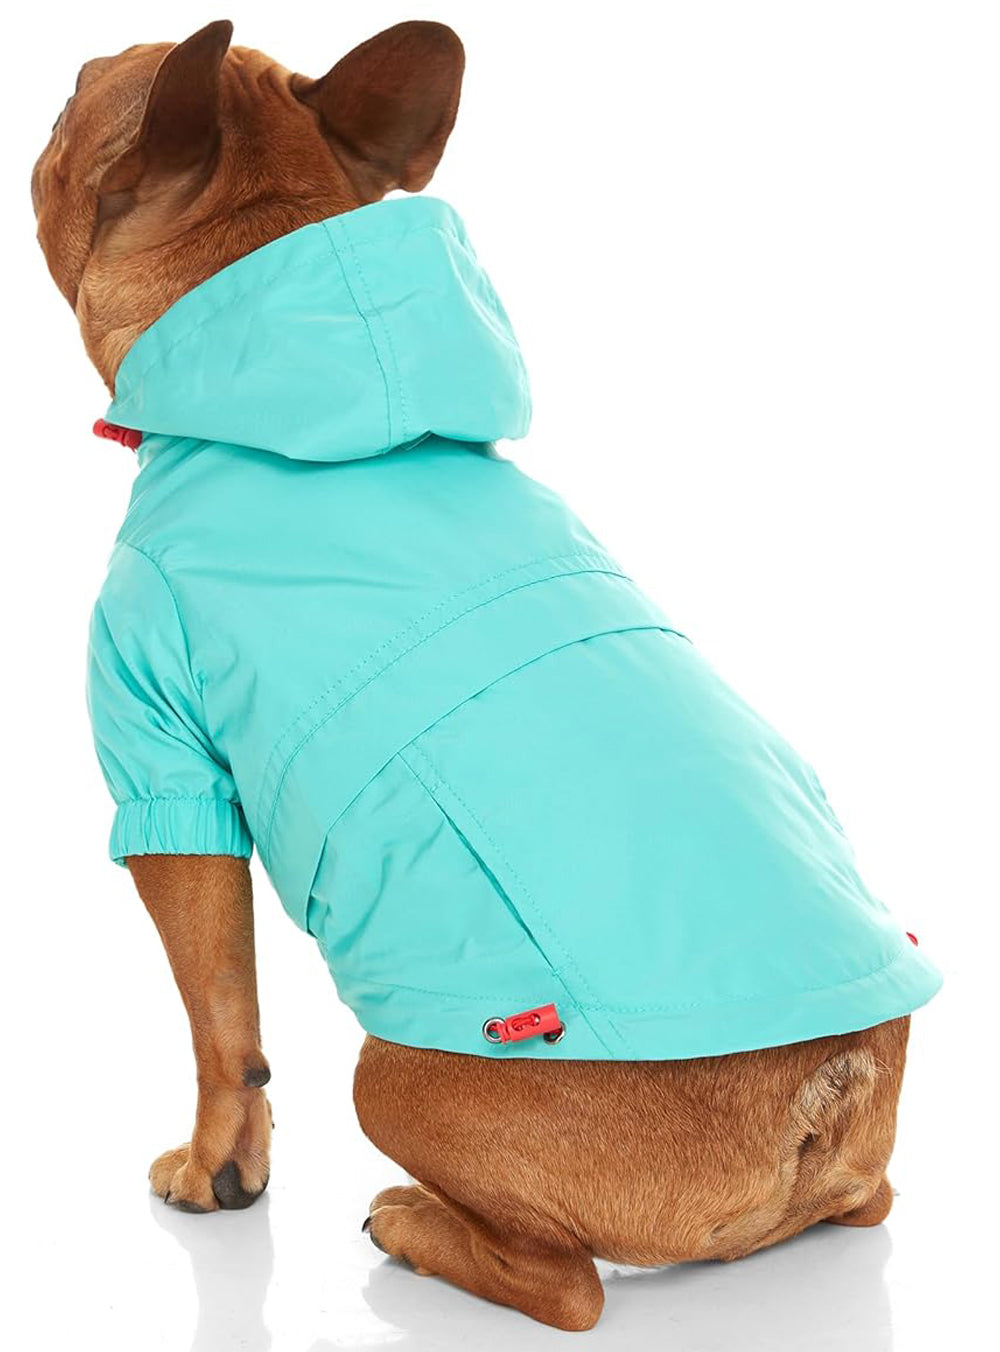 The Rainy Day Reebok Dog Jacket